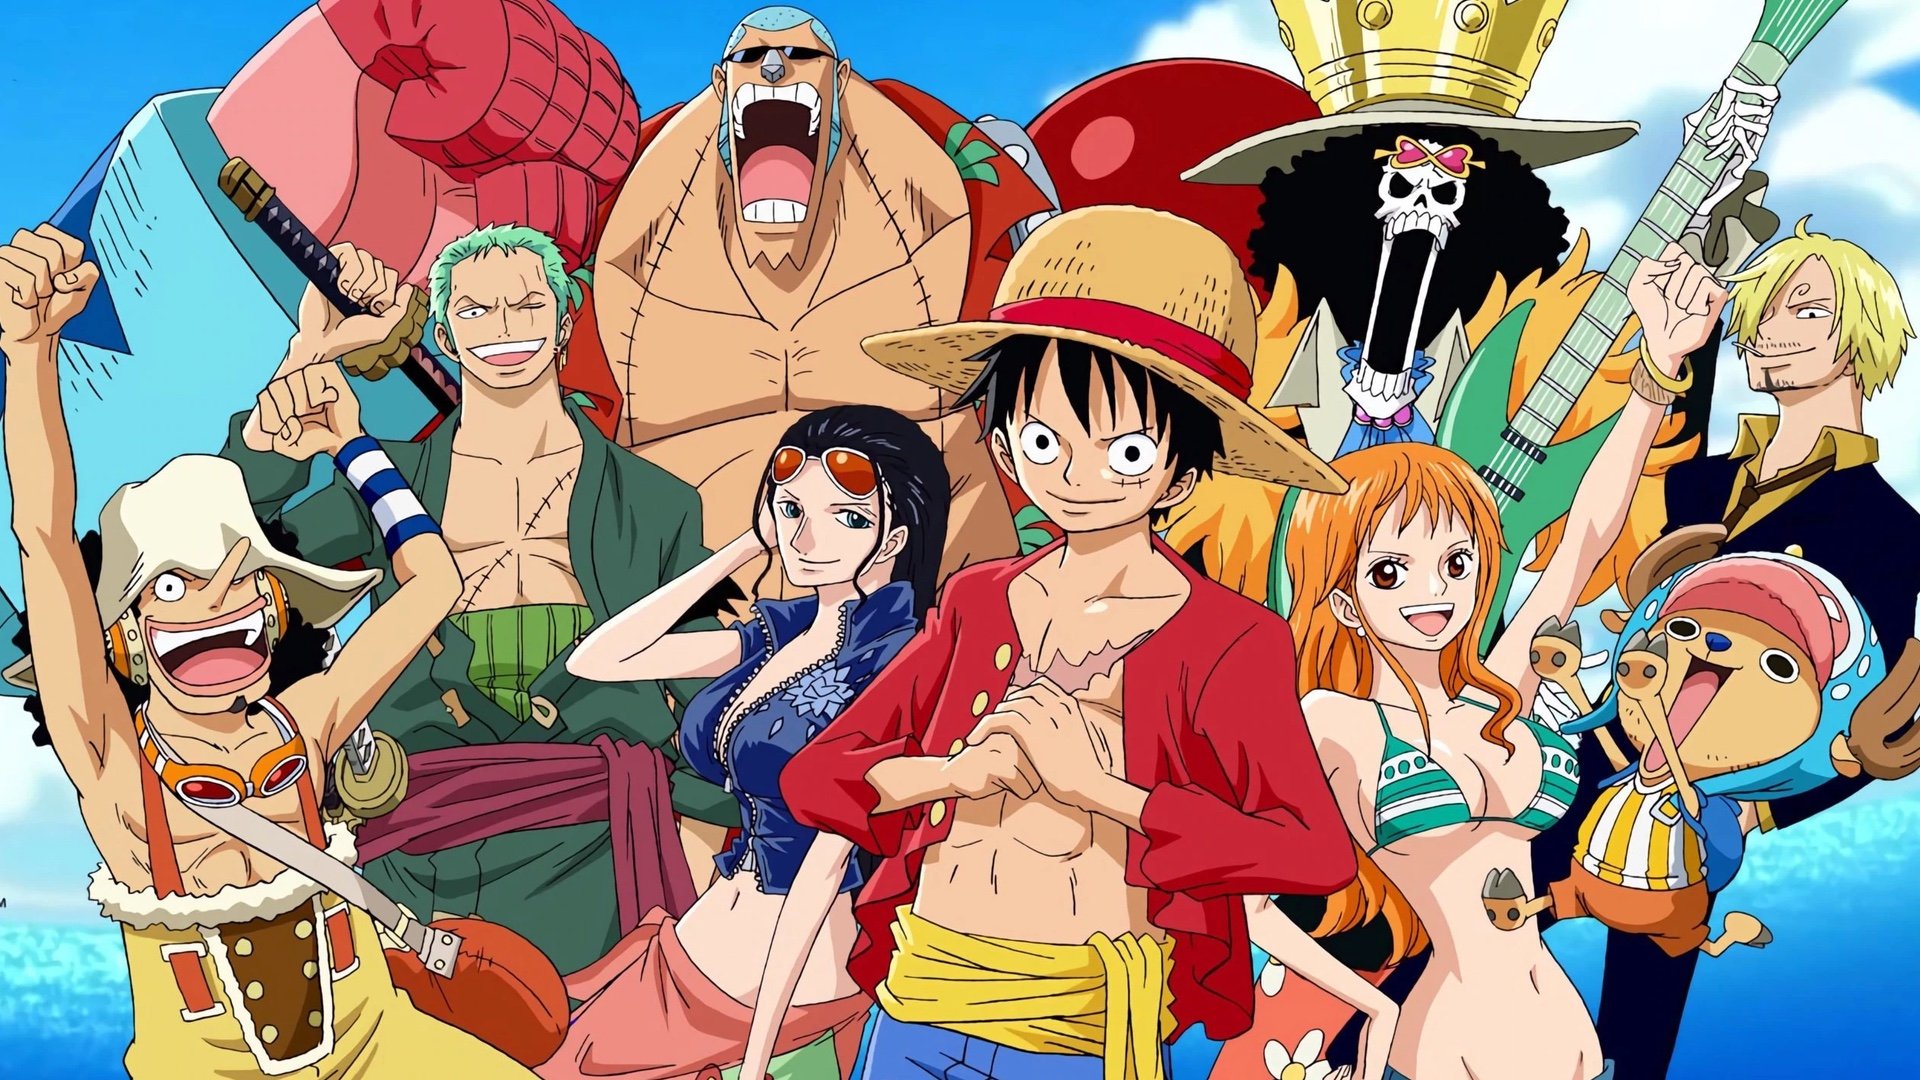 Netflix's live-action One Piece cuts major character development - Polygon